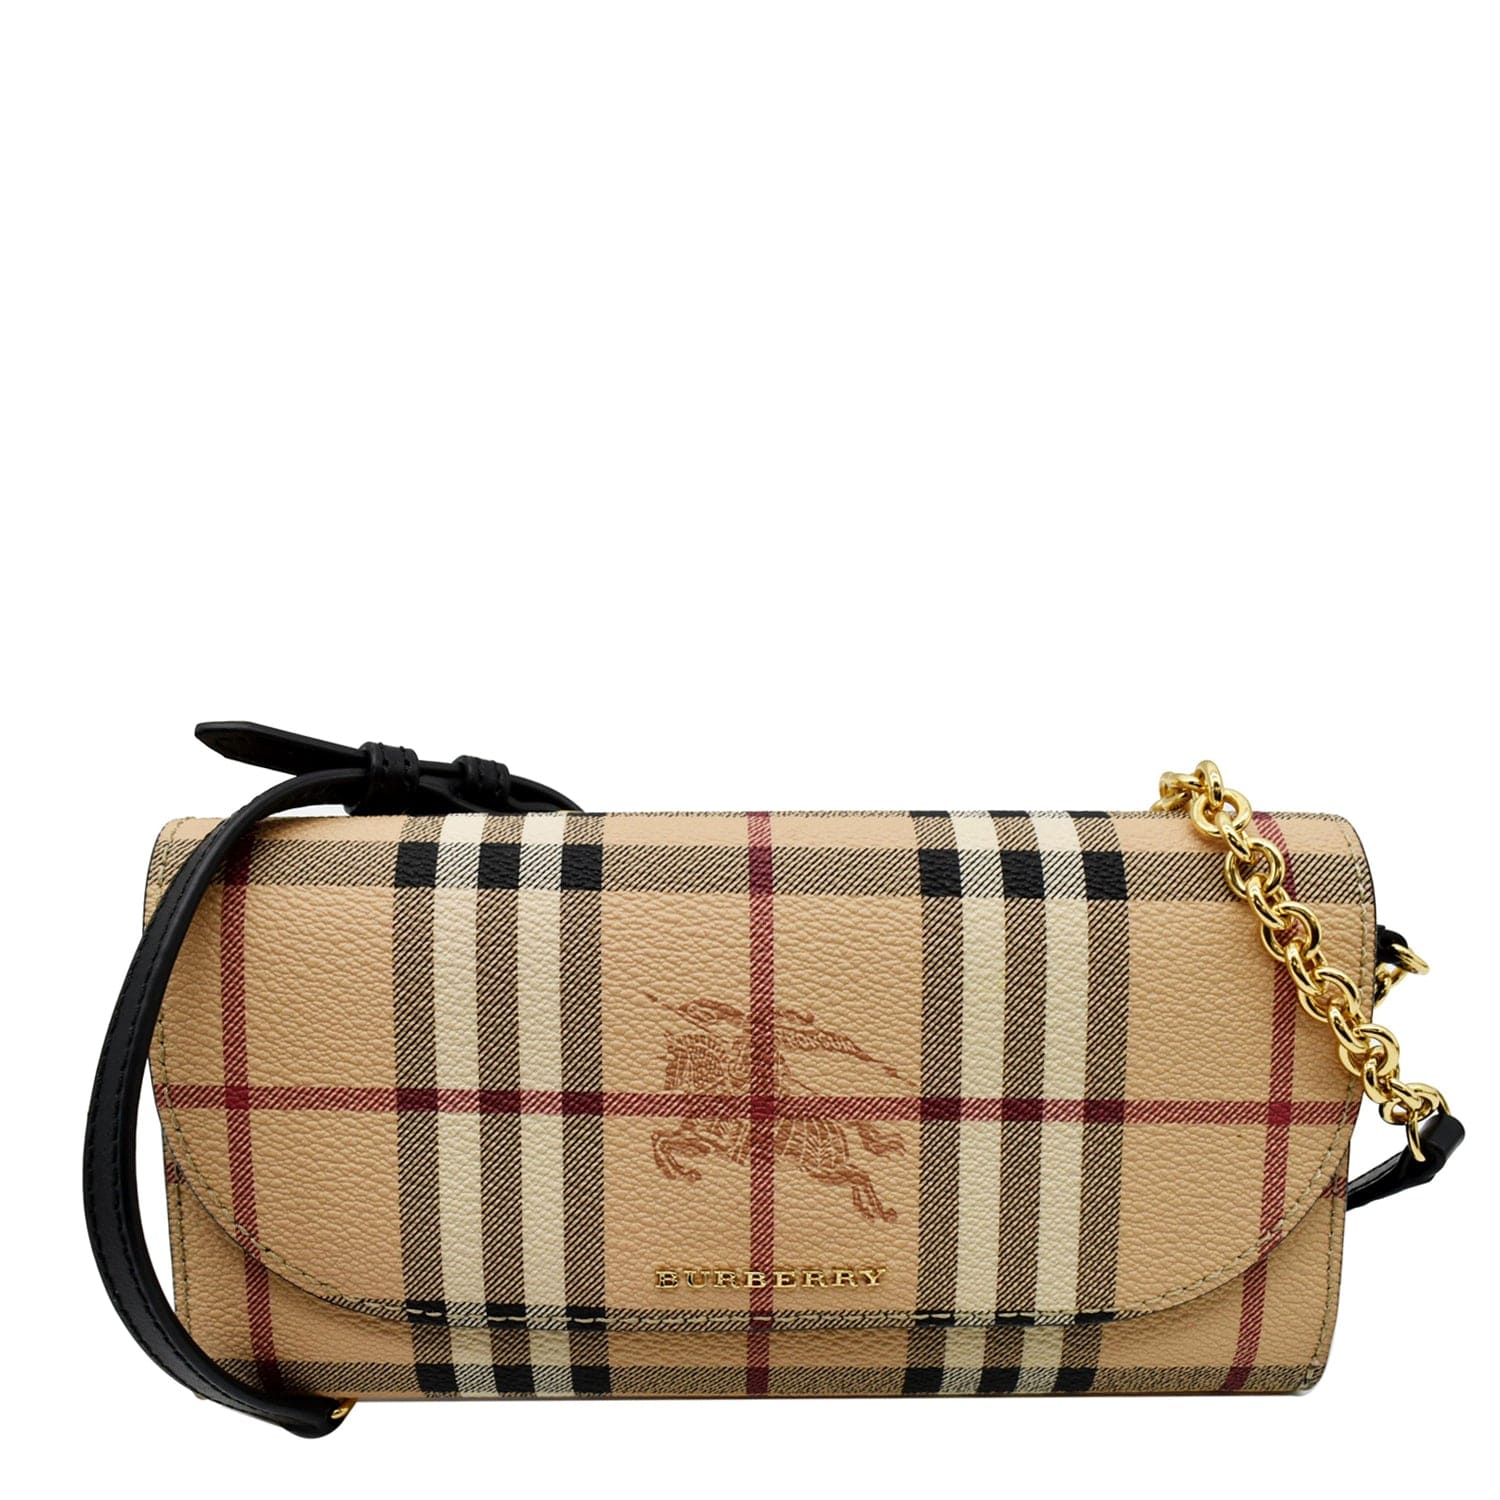 Burberry Handbags, Purses & Wallets for Women